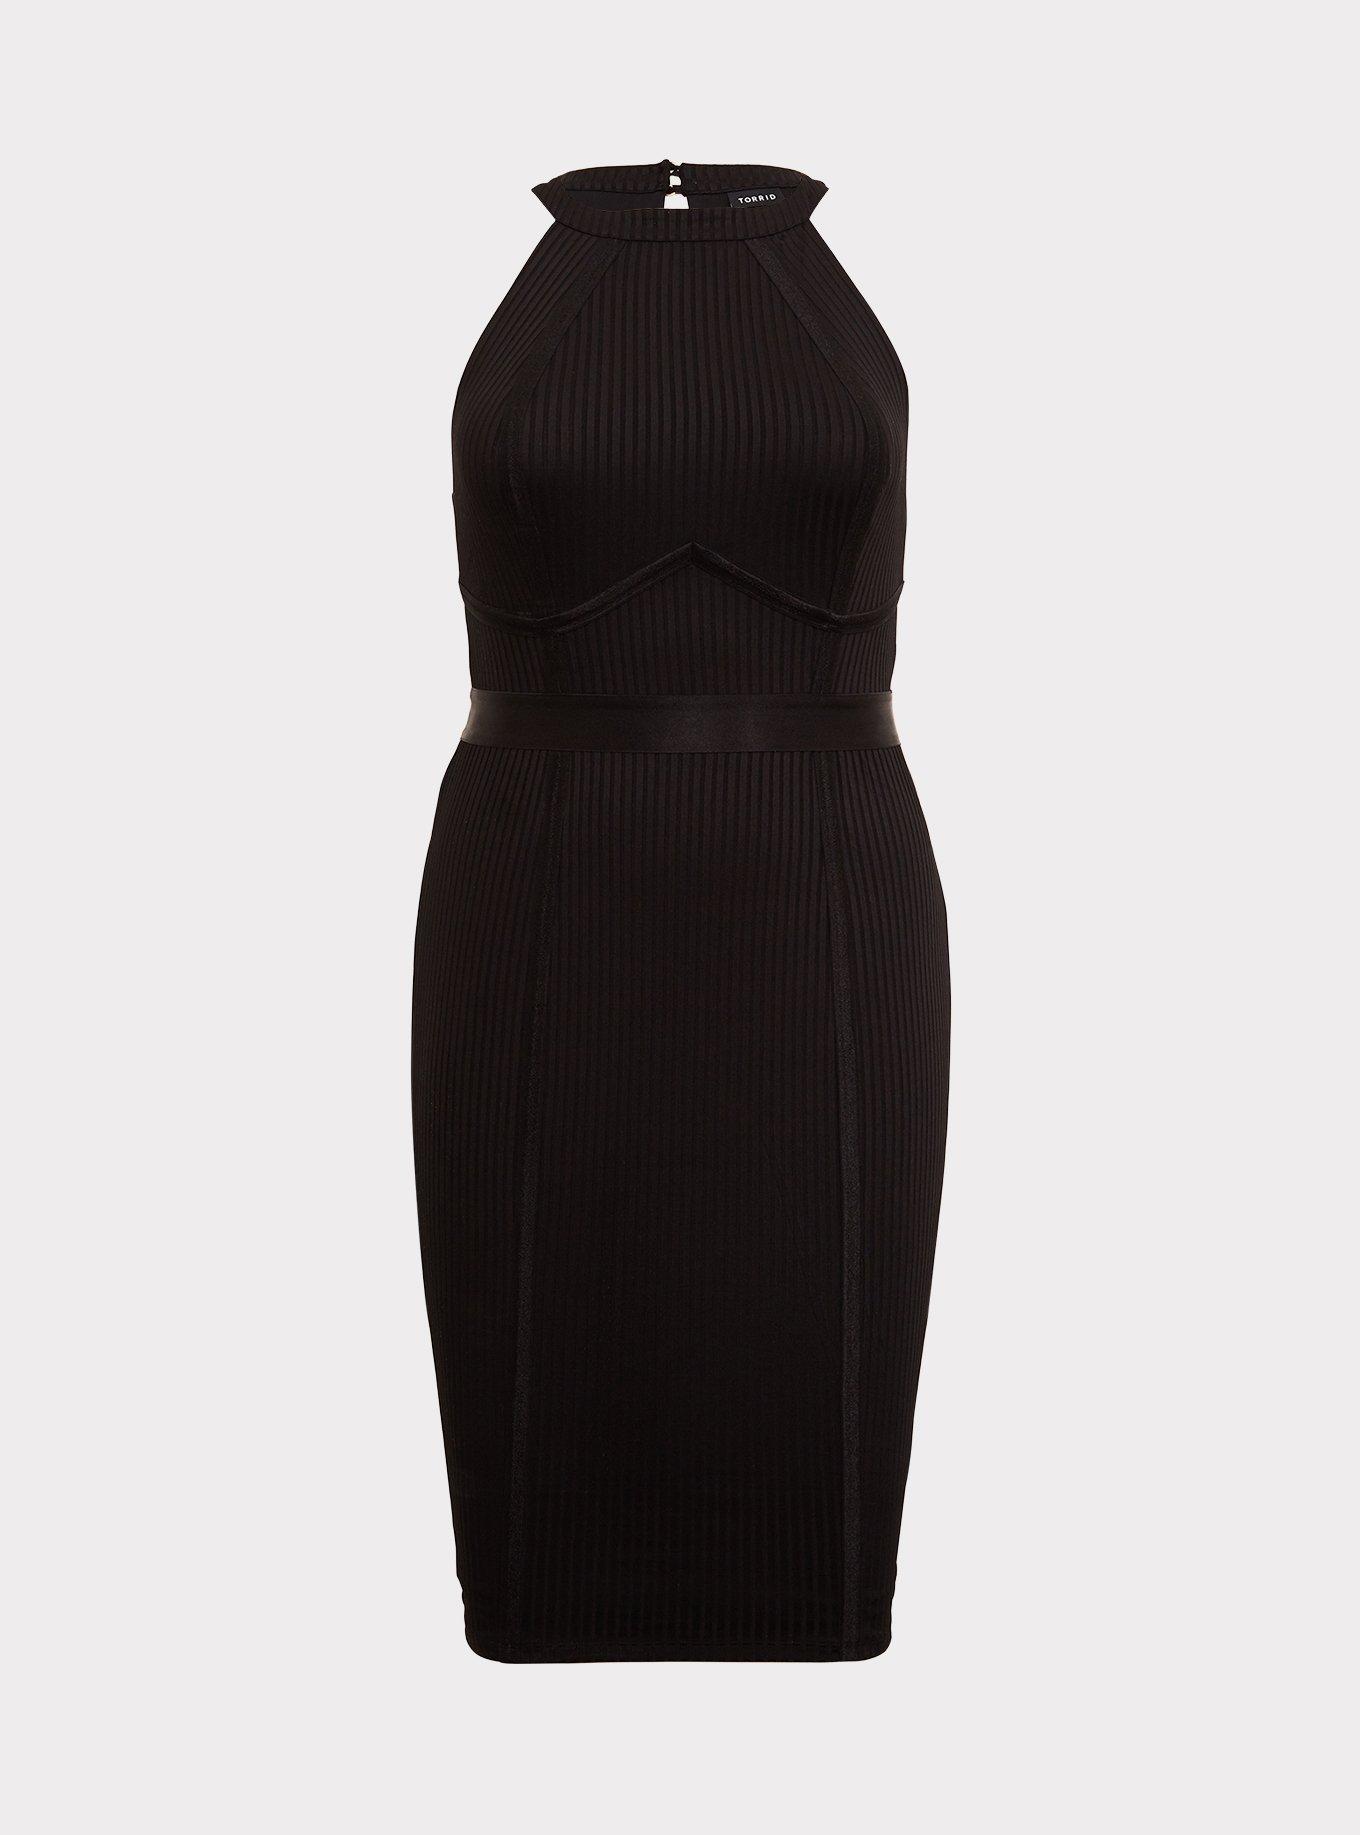 Fashion Nova Sophisticated Lady Slinky Skirt Set Plus Size 3X Halter Crop